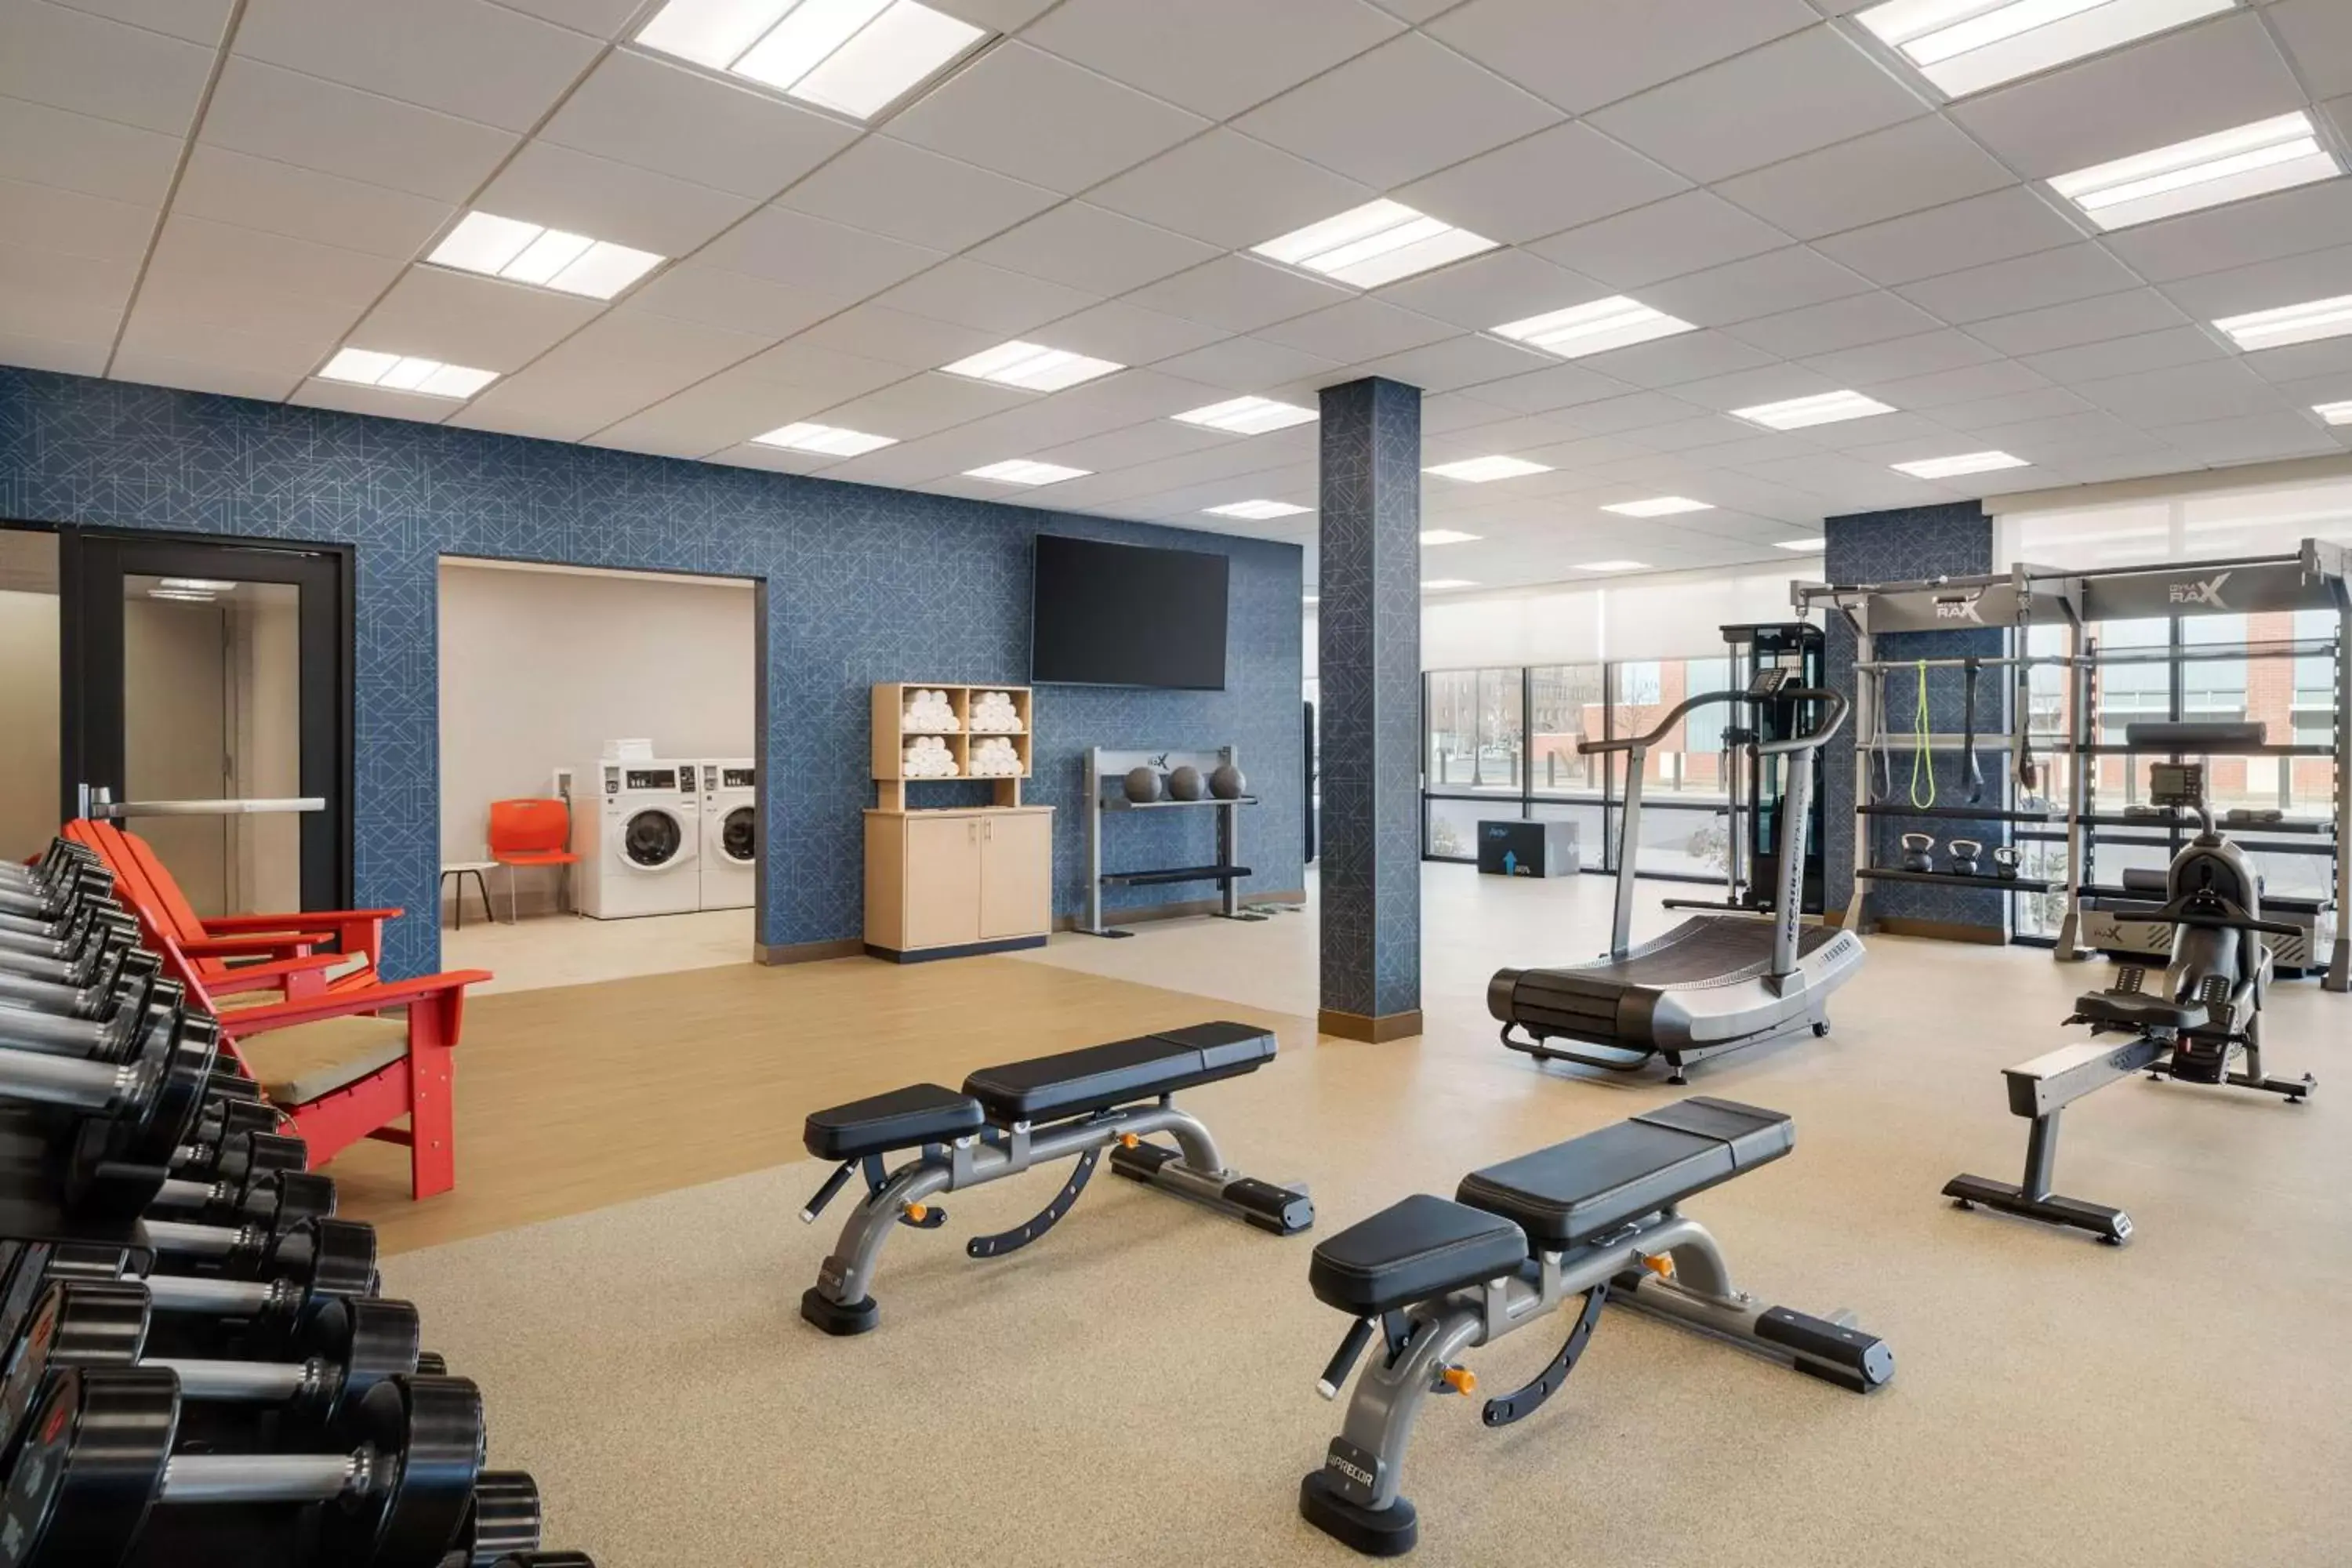 Fitness centre/facilities, Fitness Center/Facilities in Tru By Hilton Ogden, Ut